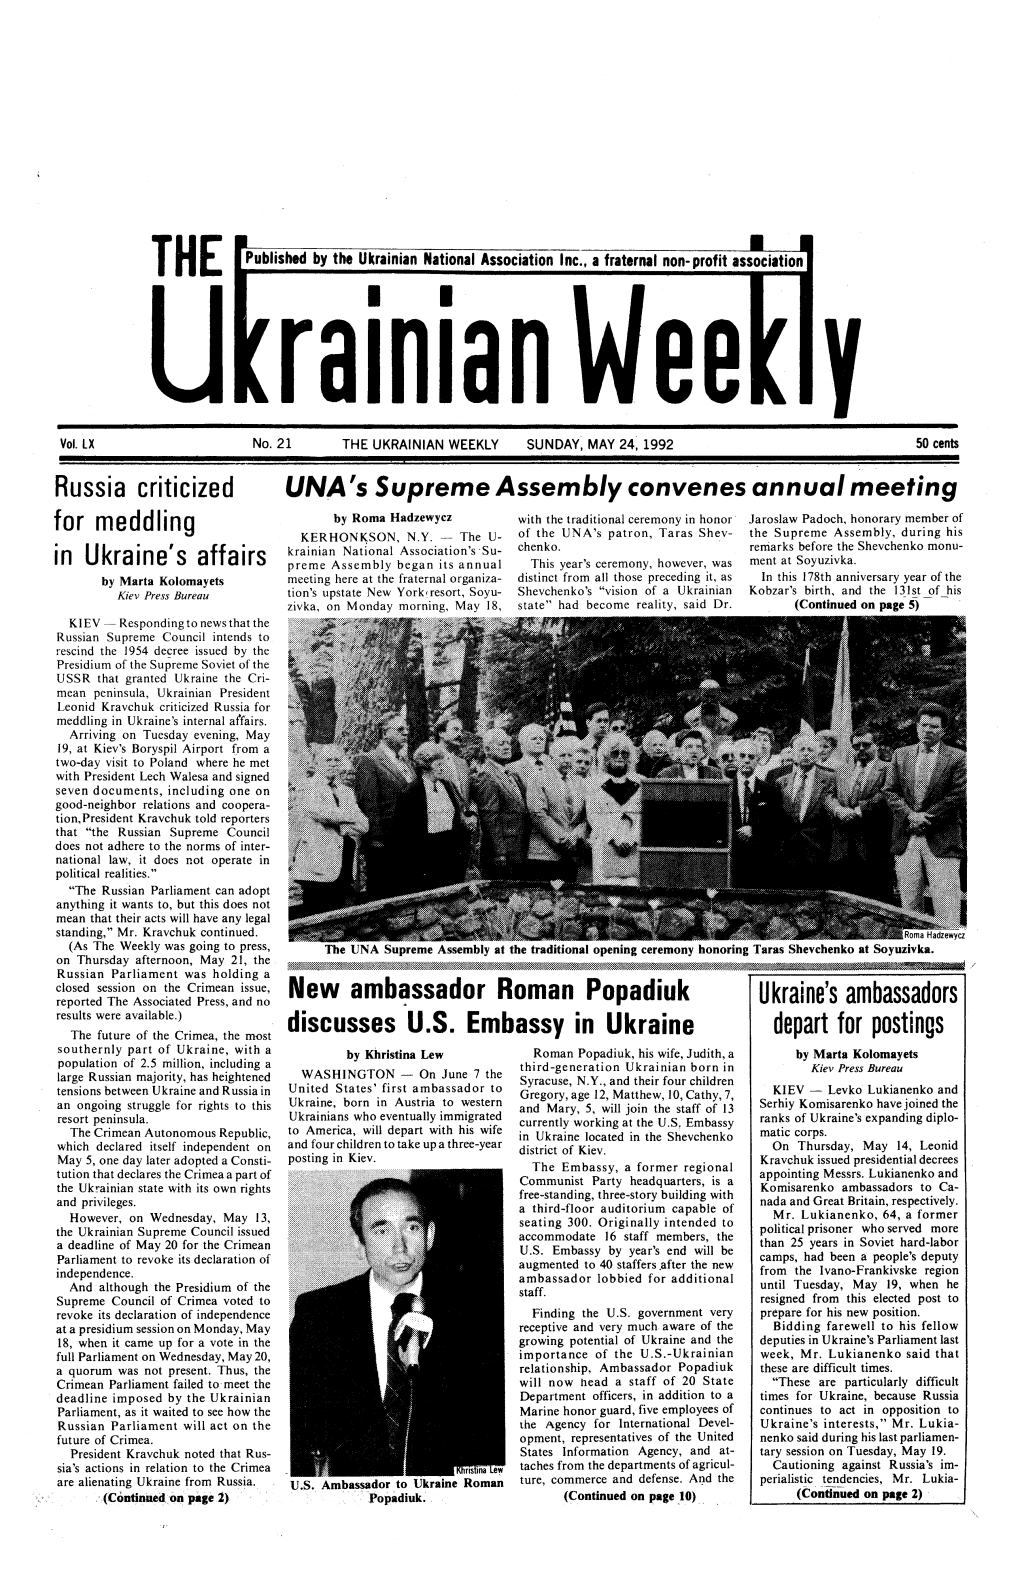 The Ukrainian Weekly 1992, No.21